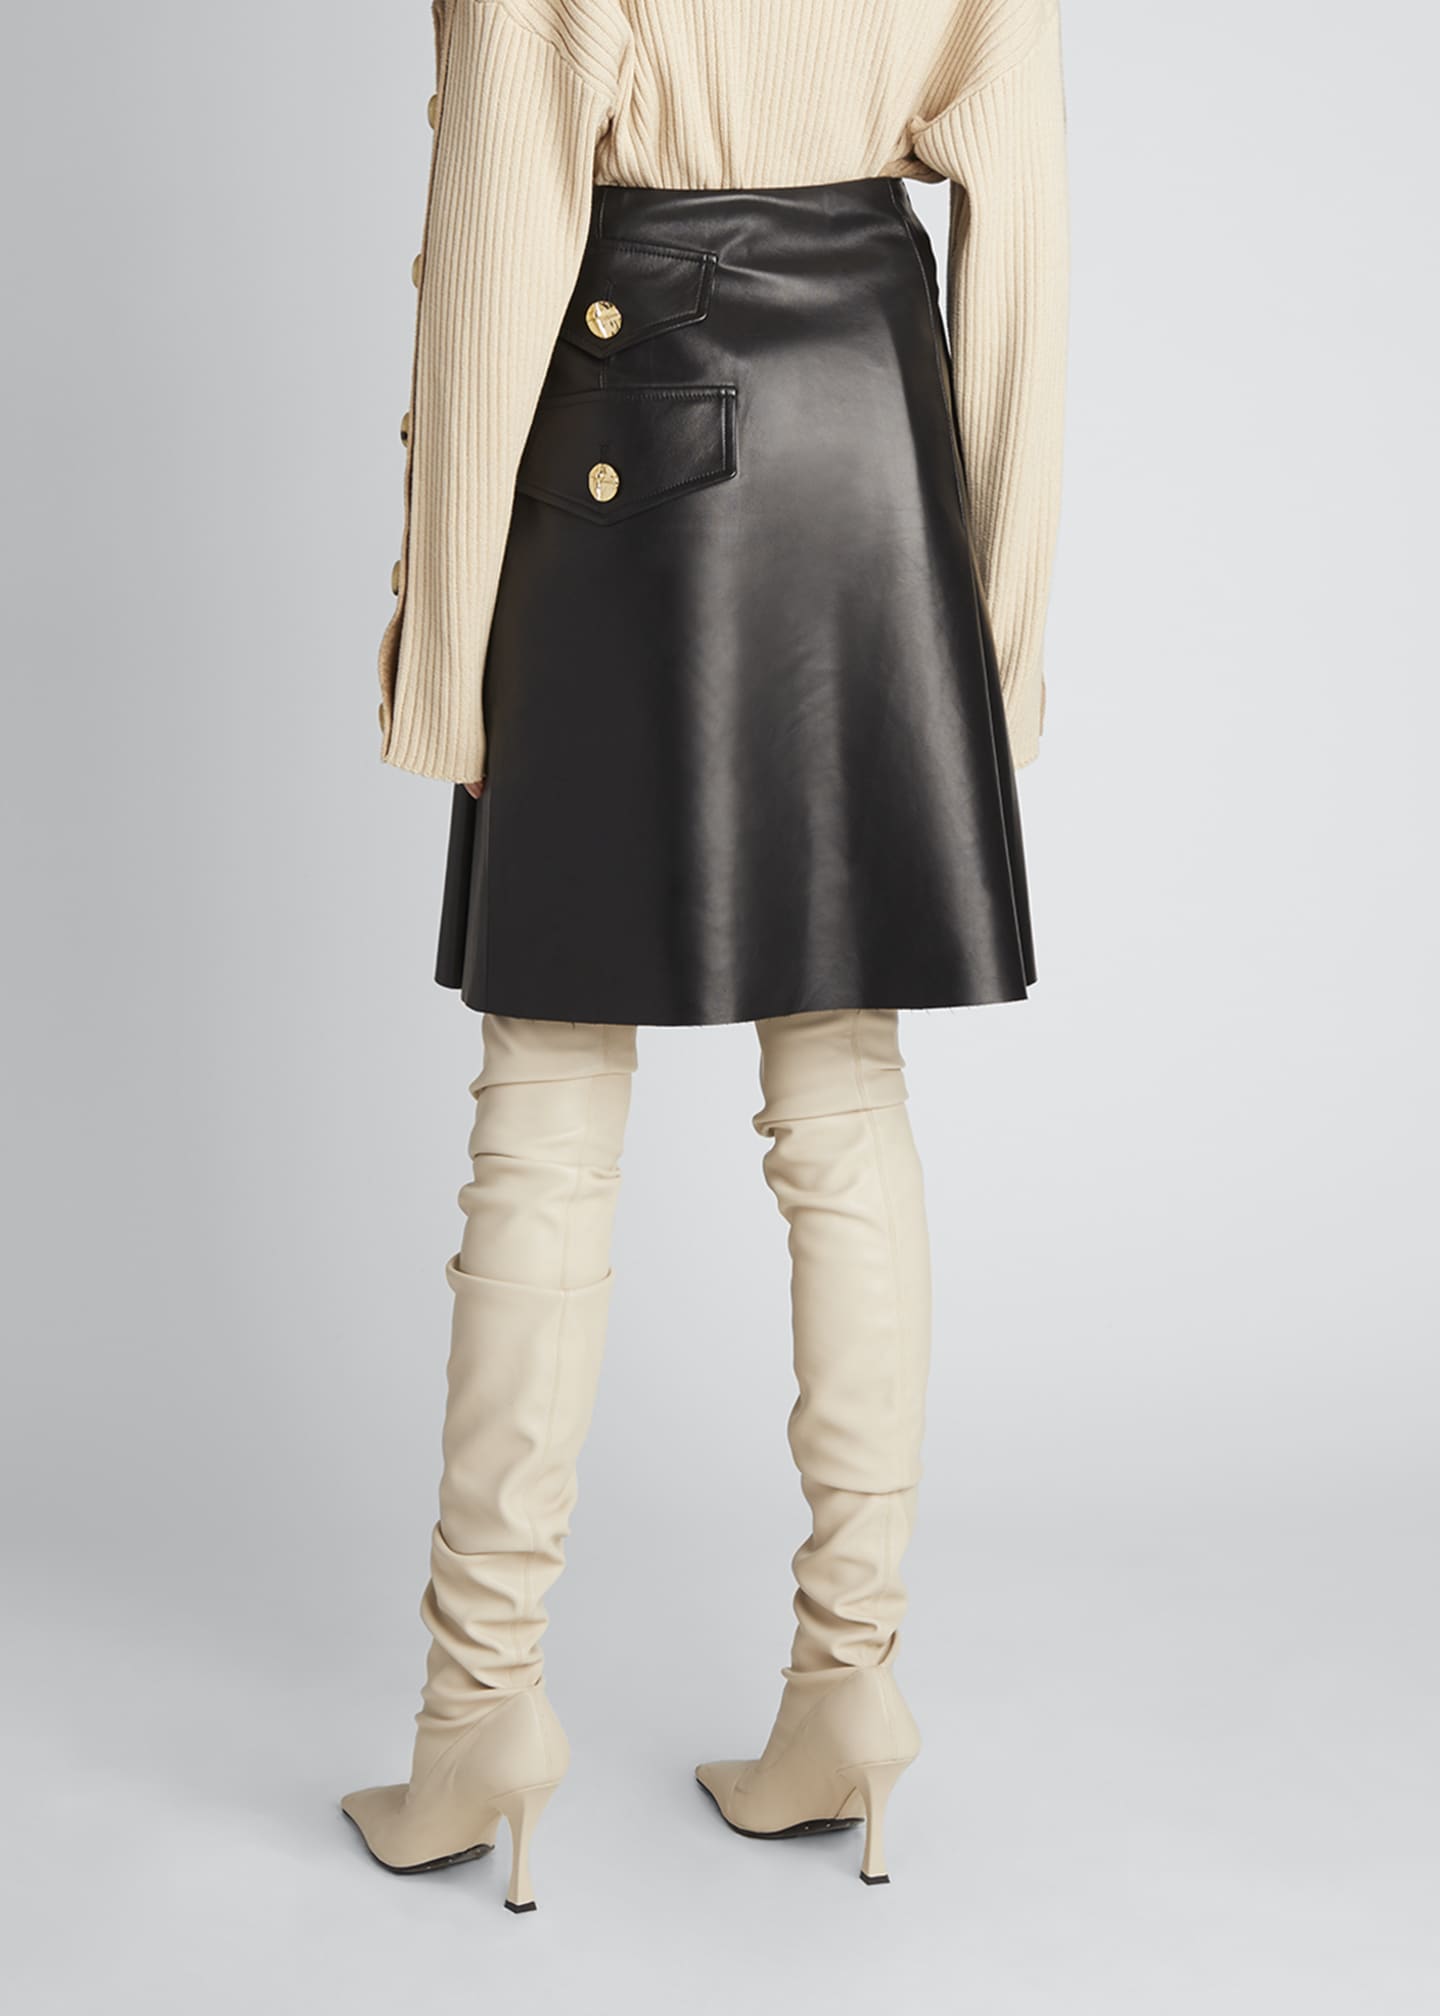 Proenza Schouler Leather Pleated Skirt - Bergdorf Goodman